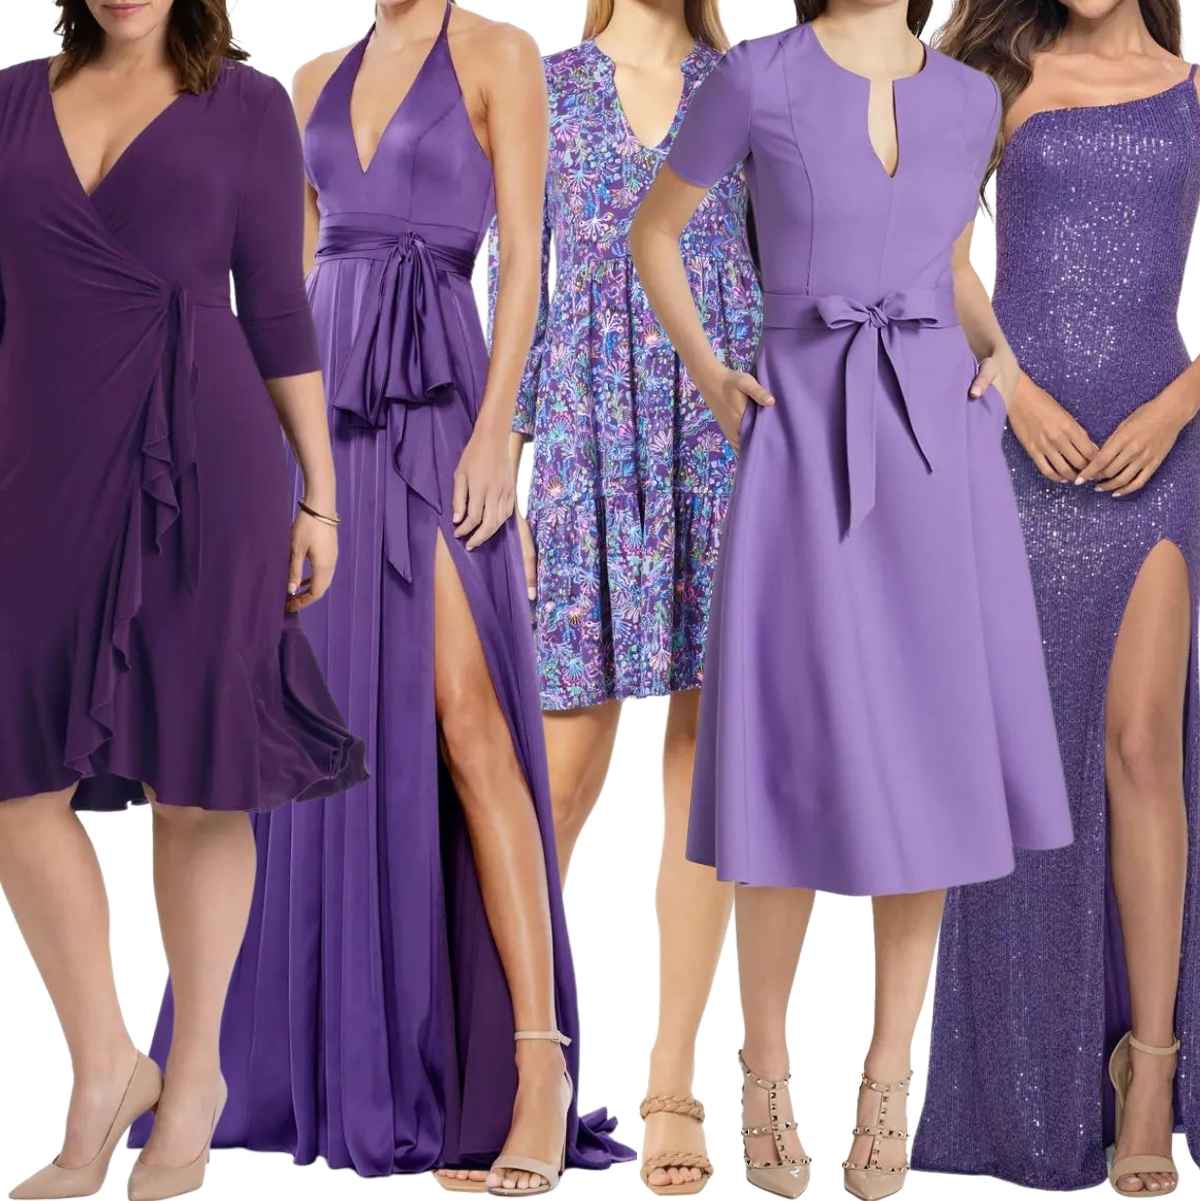 light lavender color dress